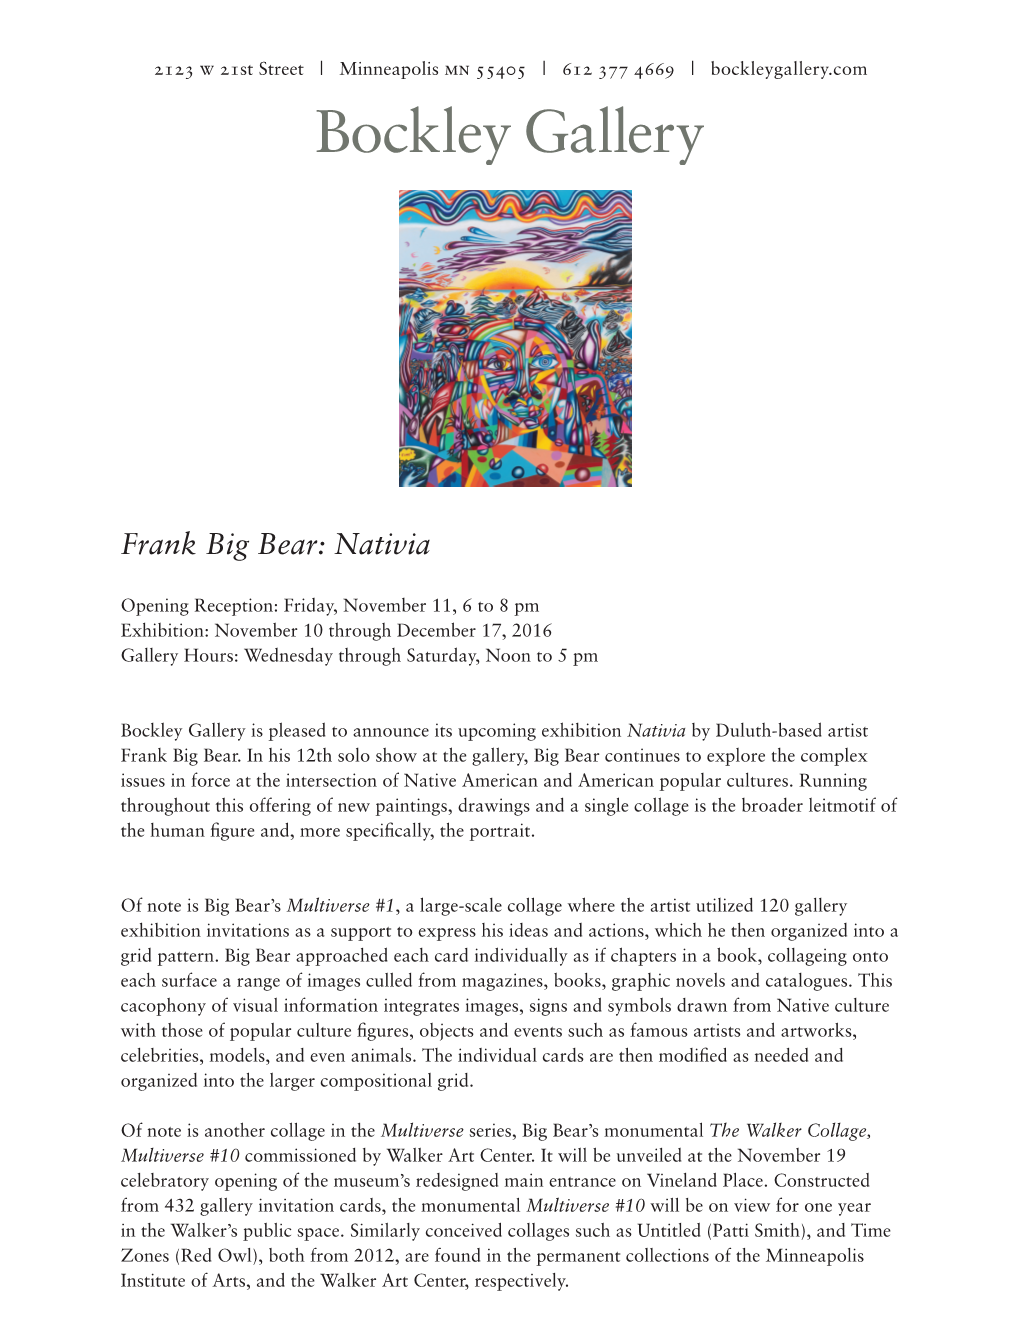 Frank Big Bear: Nativia